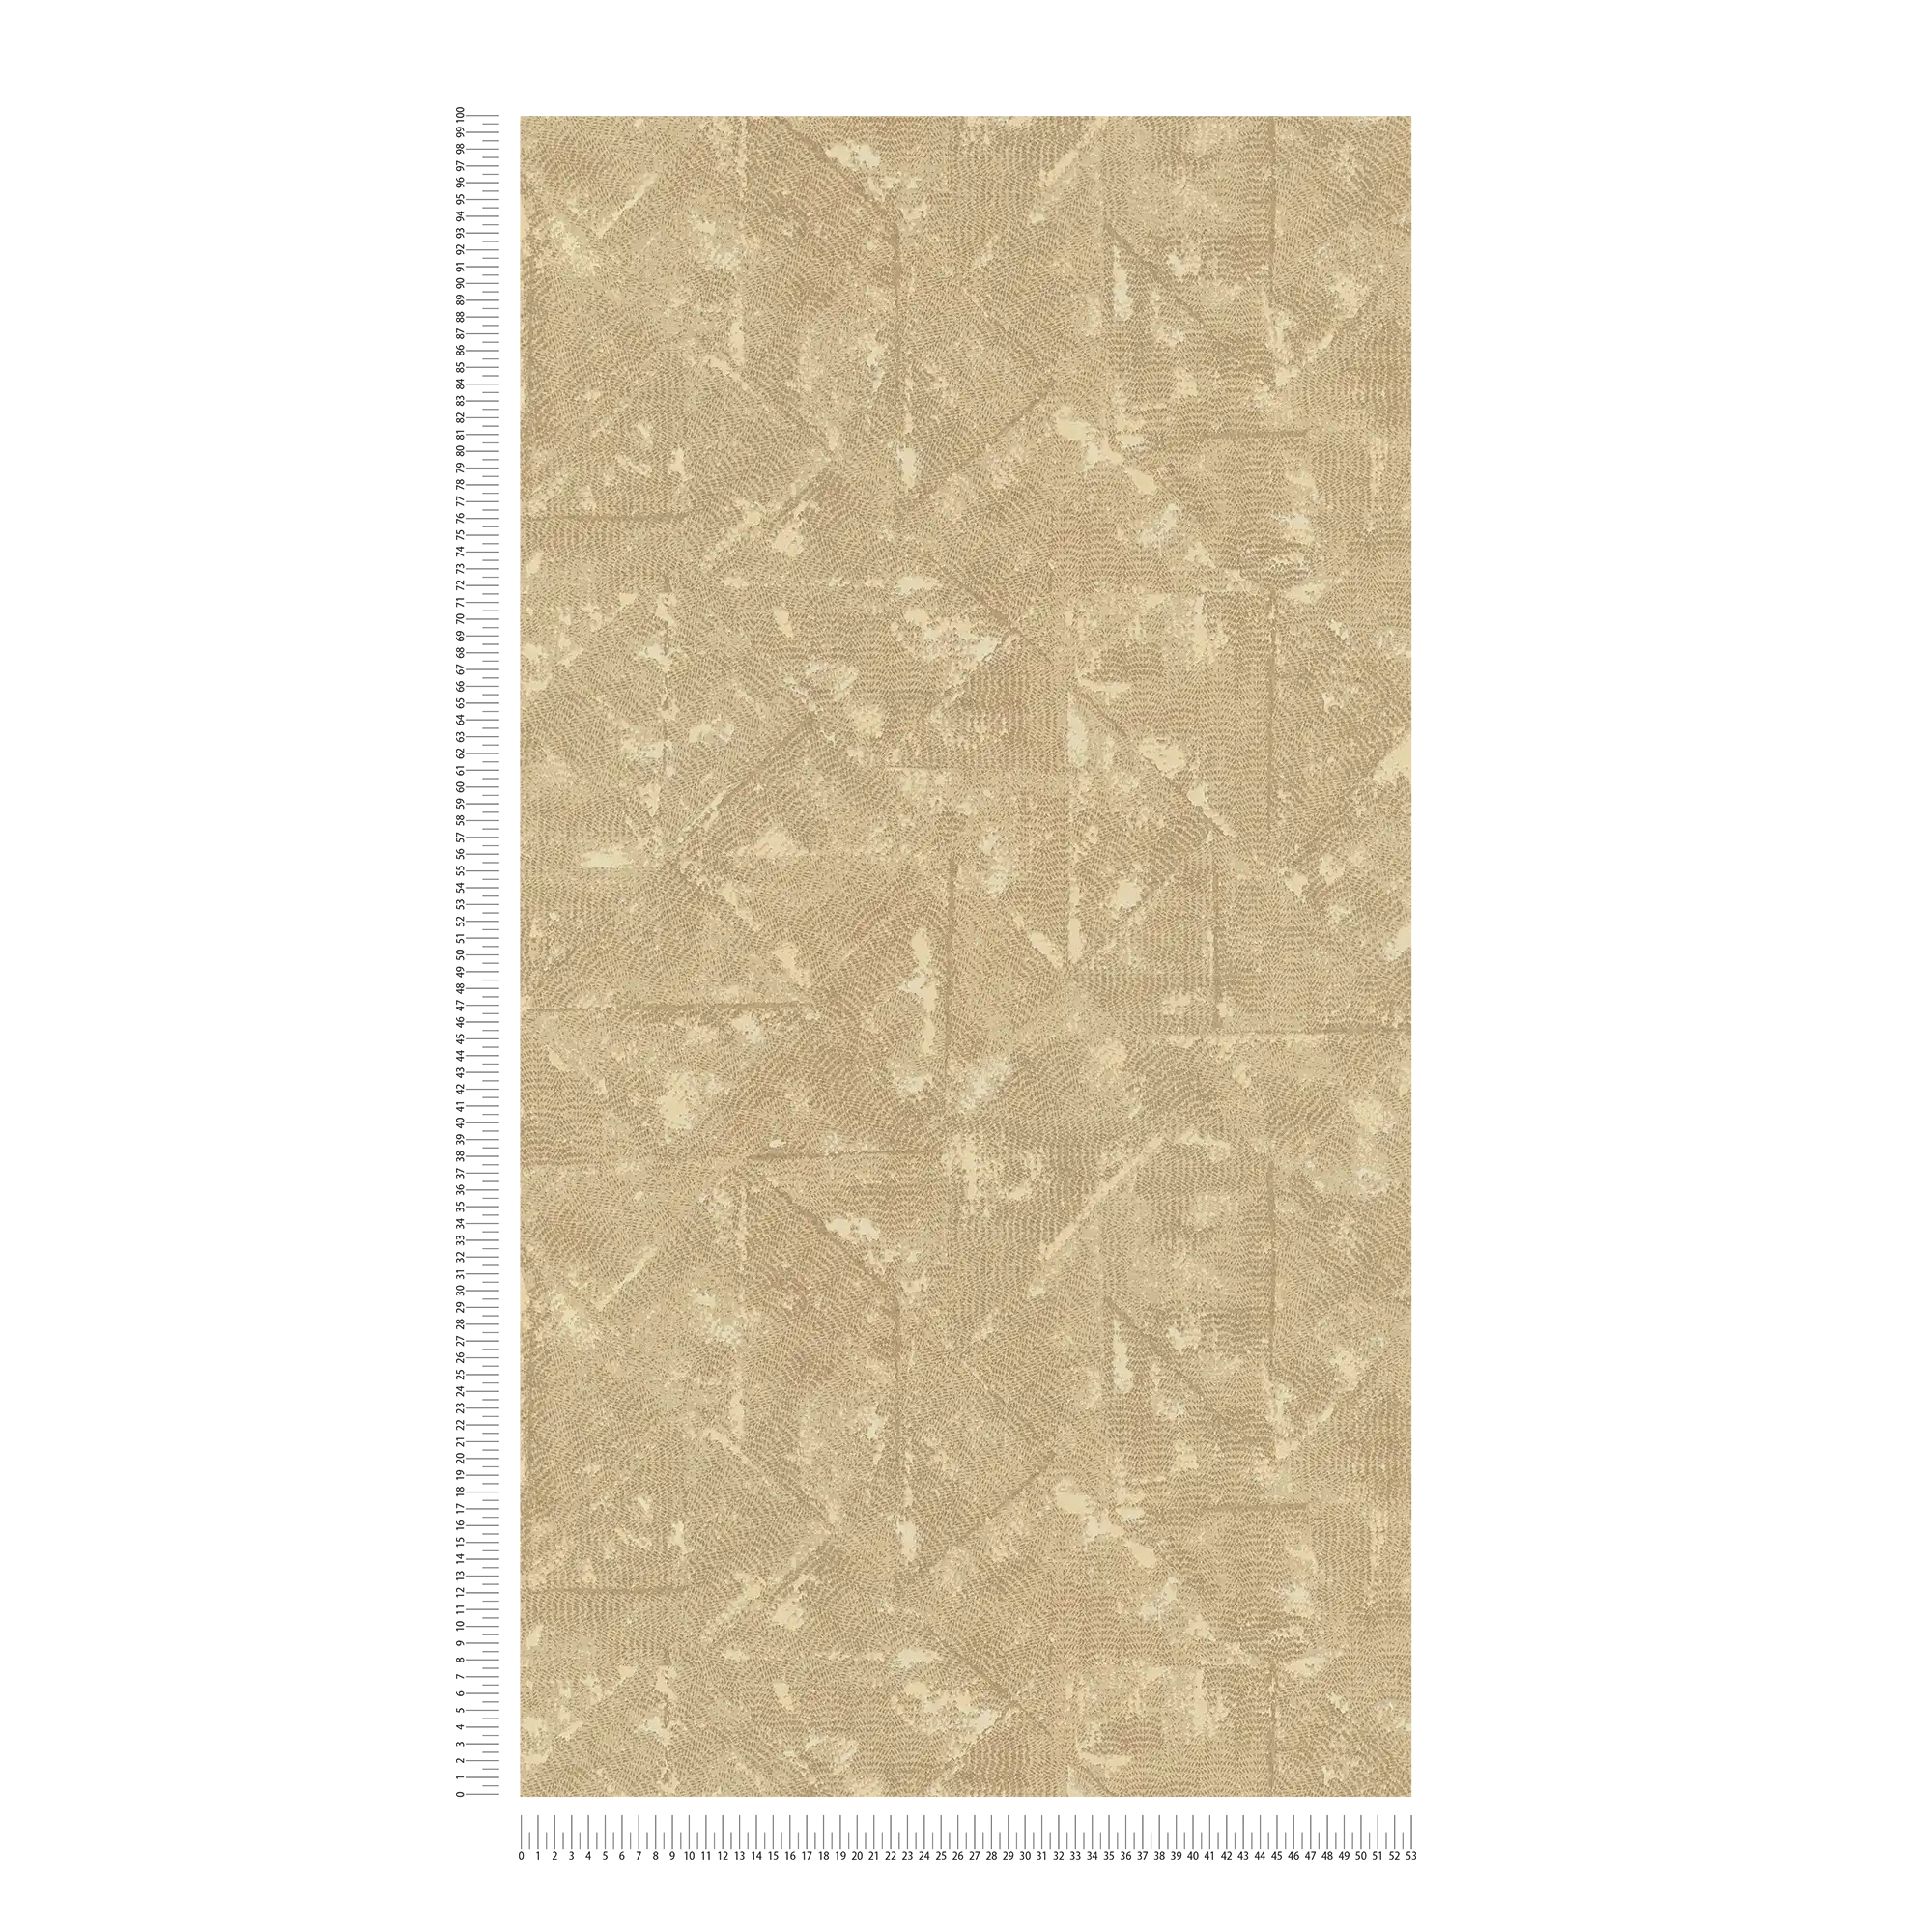             Plain non-woven wallpaper with asymmetrical details - beige, brown, gold
        